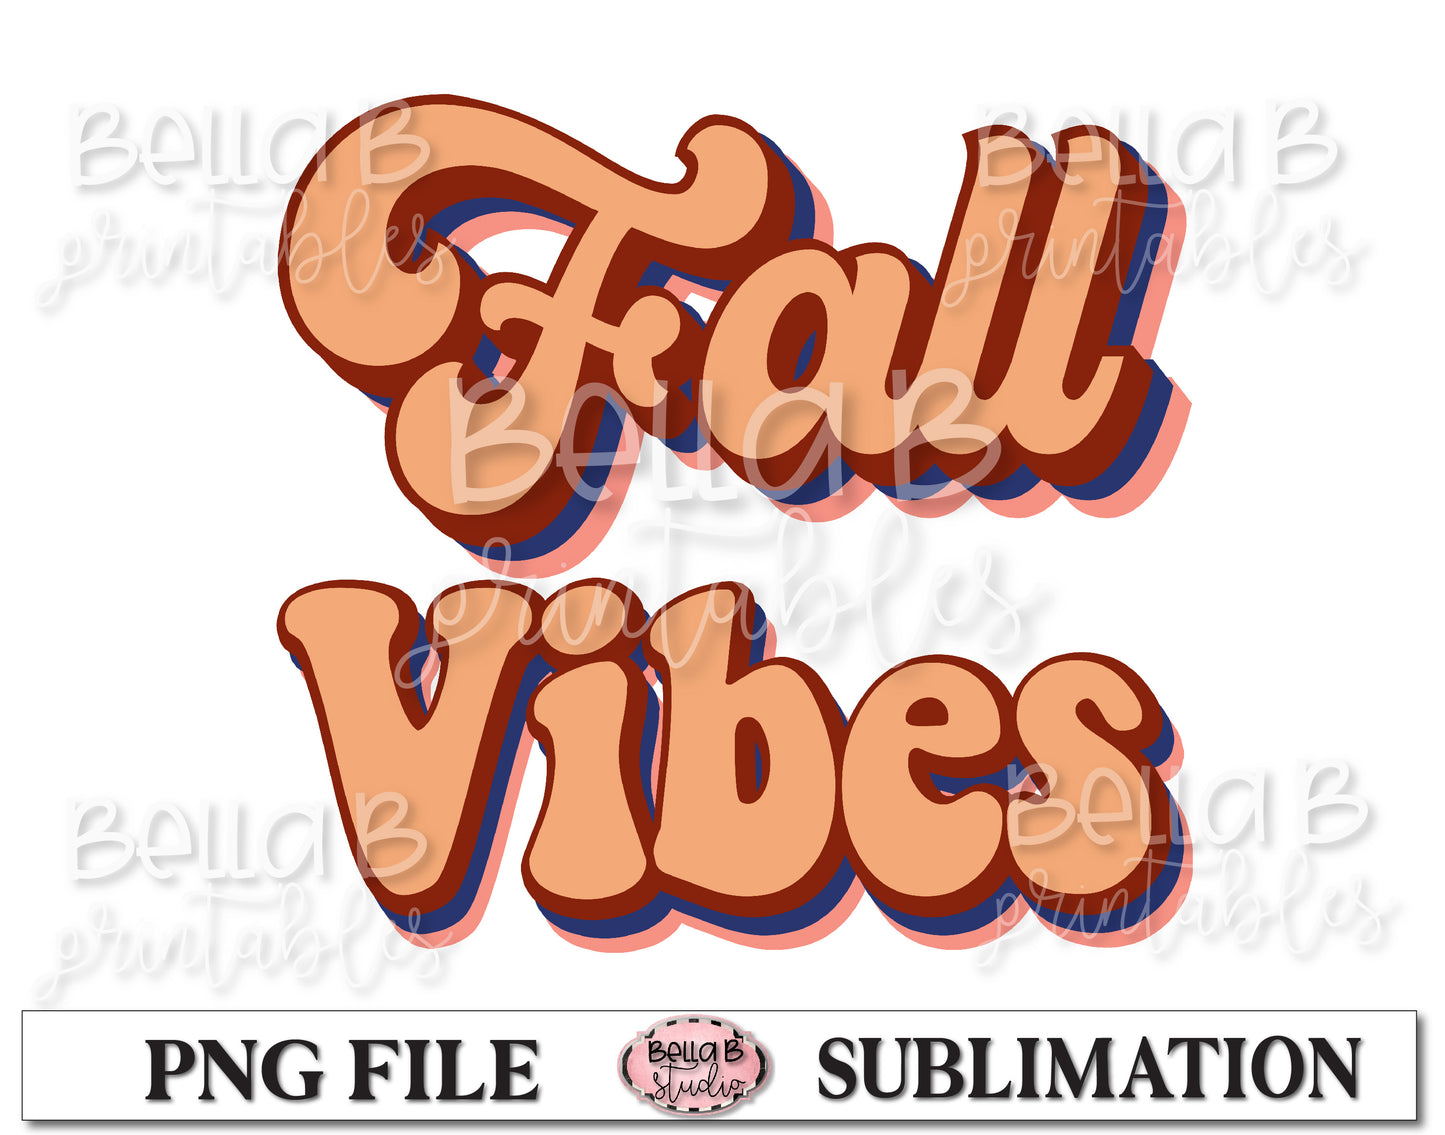 Retro Fall Vibes Sublimation Design